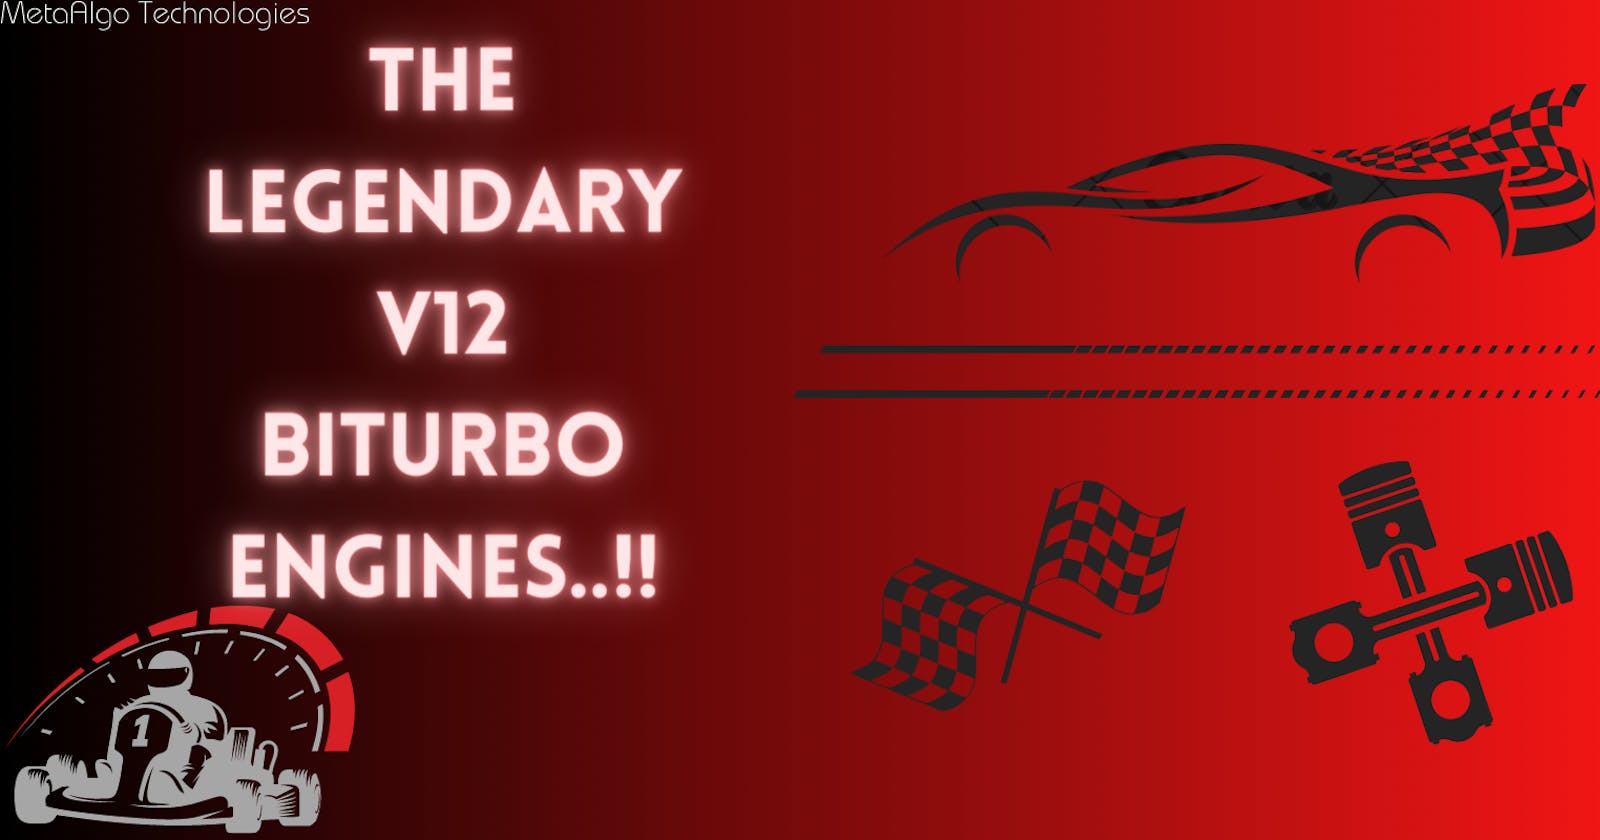 The Legendary V12 Biturbo Engines